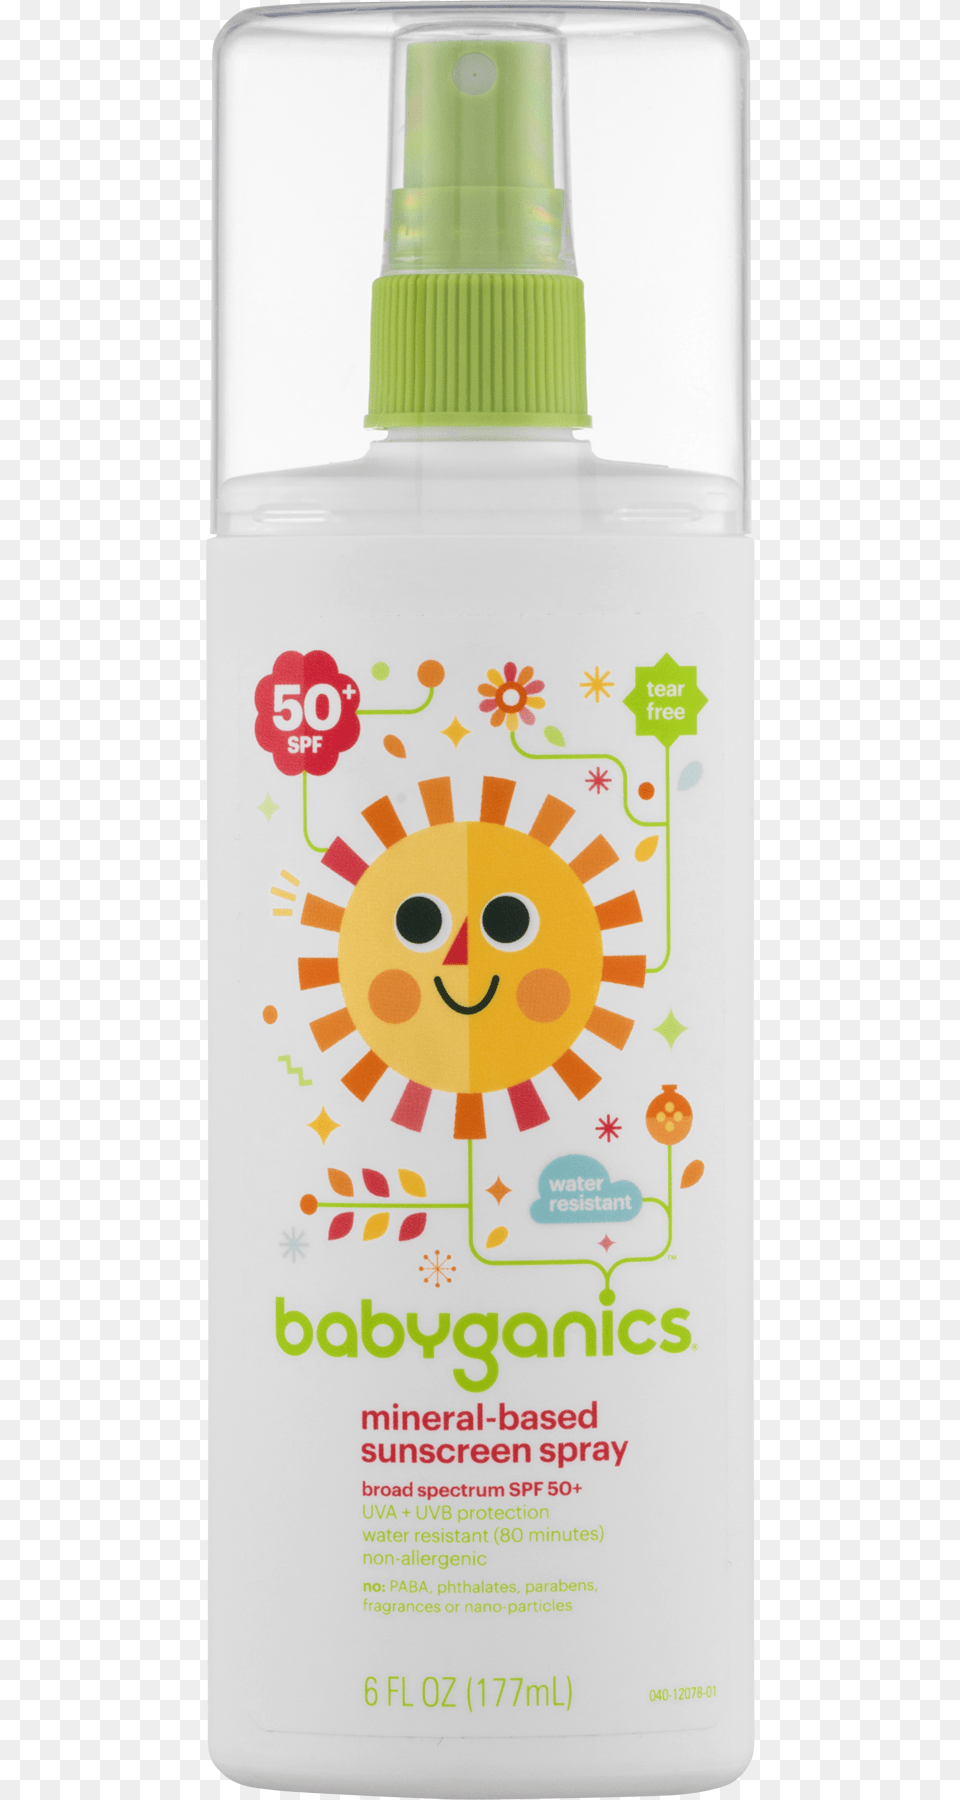 Babyganics Mineral Based Baby Sunscreen Spray Spf, Bottle, Cosmetics, Advertisement Png